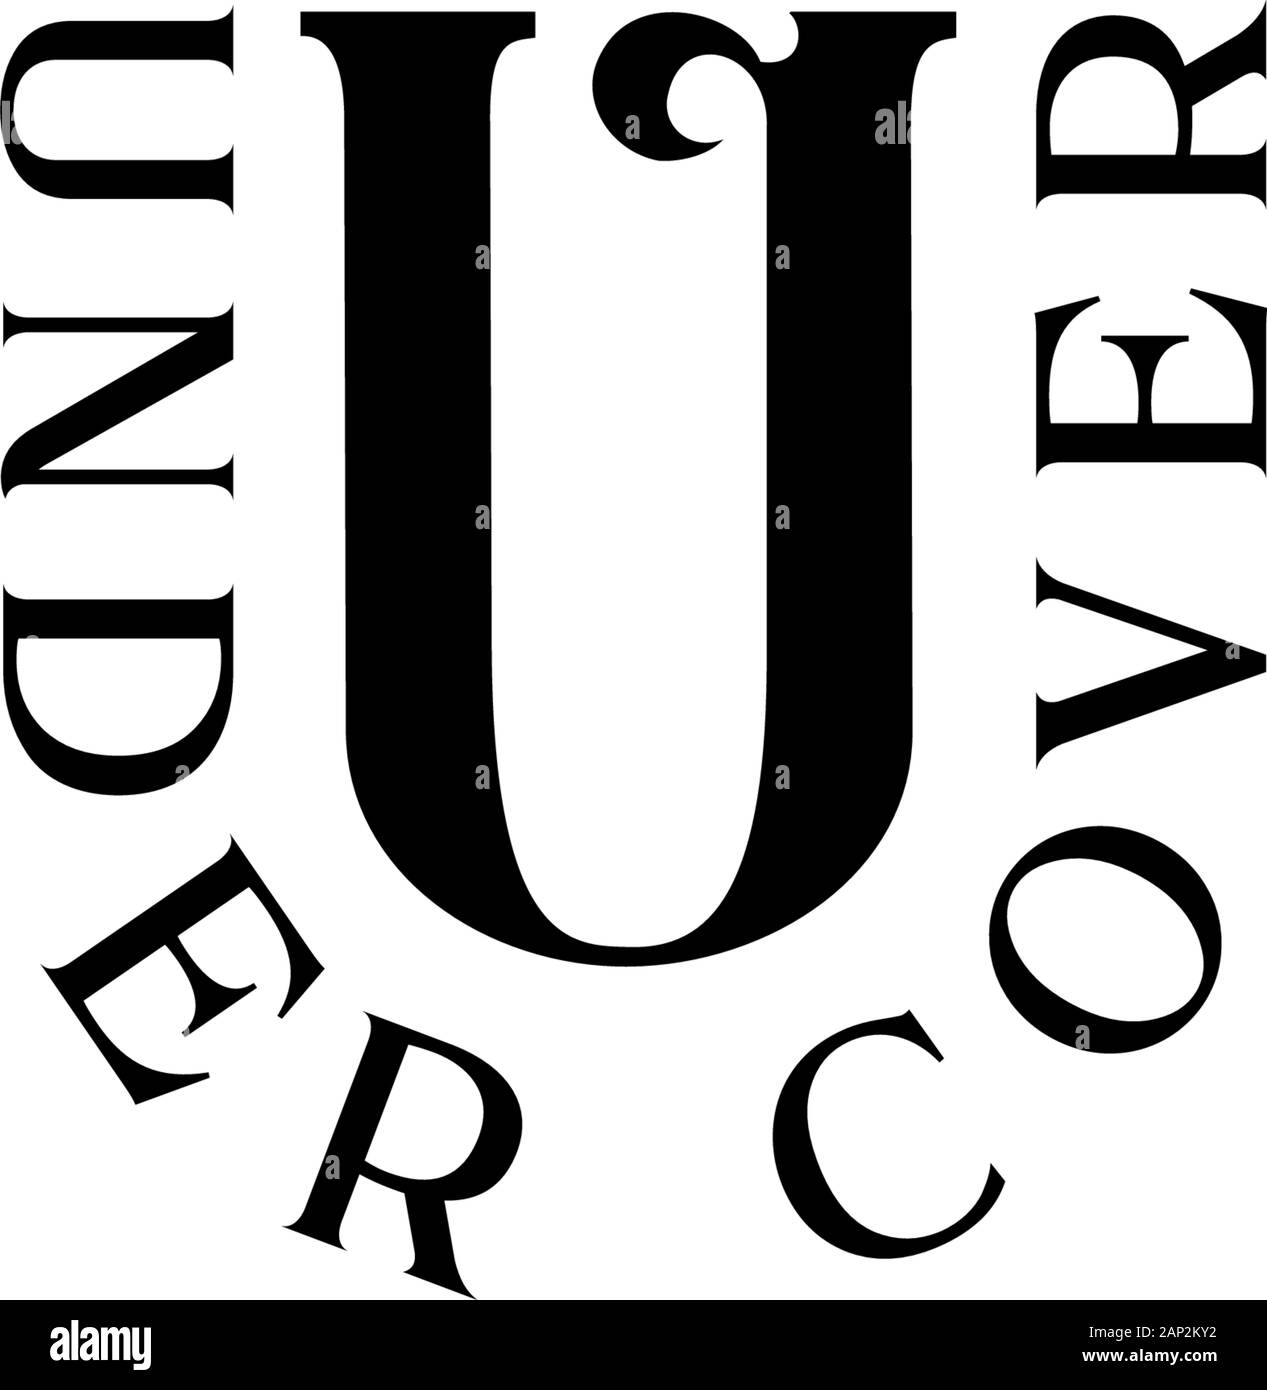 a logo design about undercover idea. Undercover text illustration Stock Vector